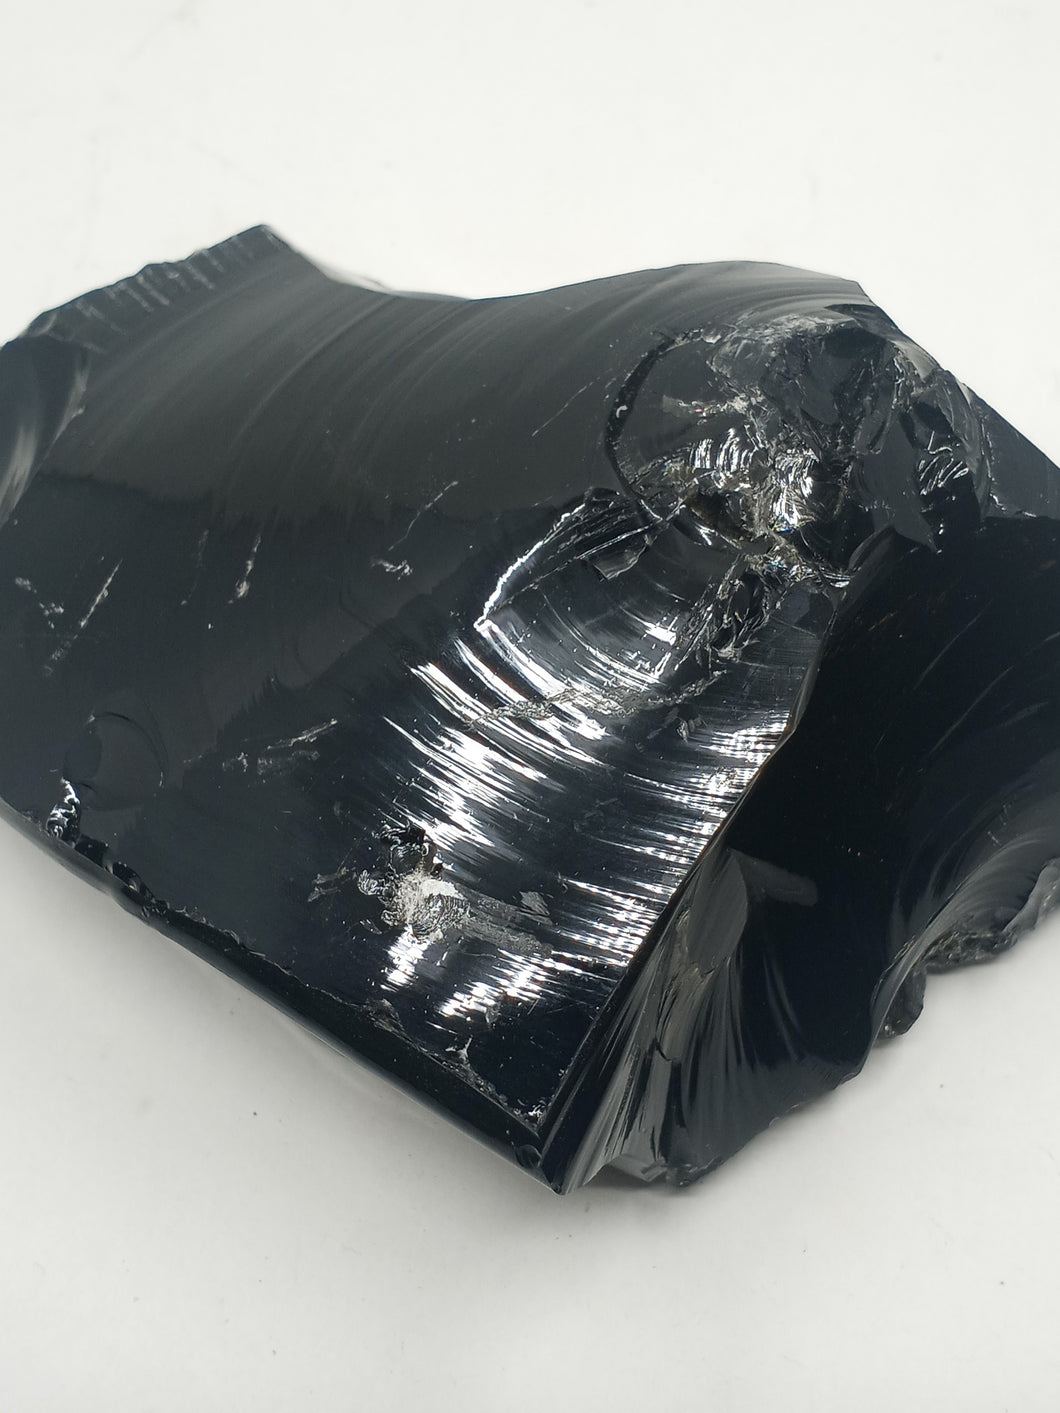 Obsidian Black Chunk Size 2 700g-1.4kg